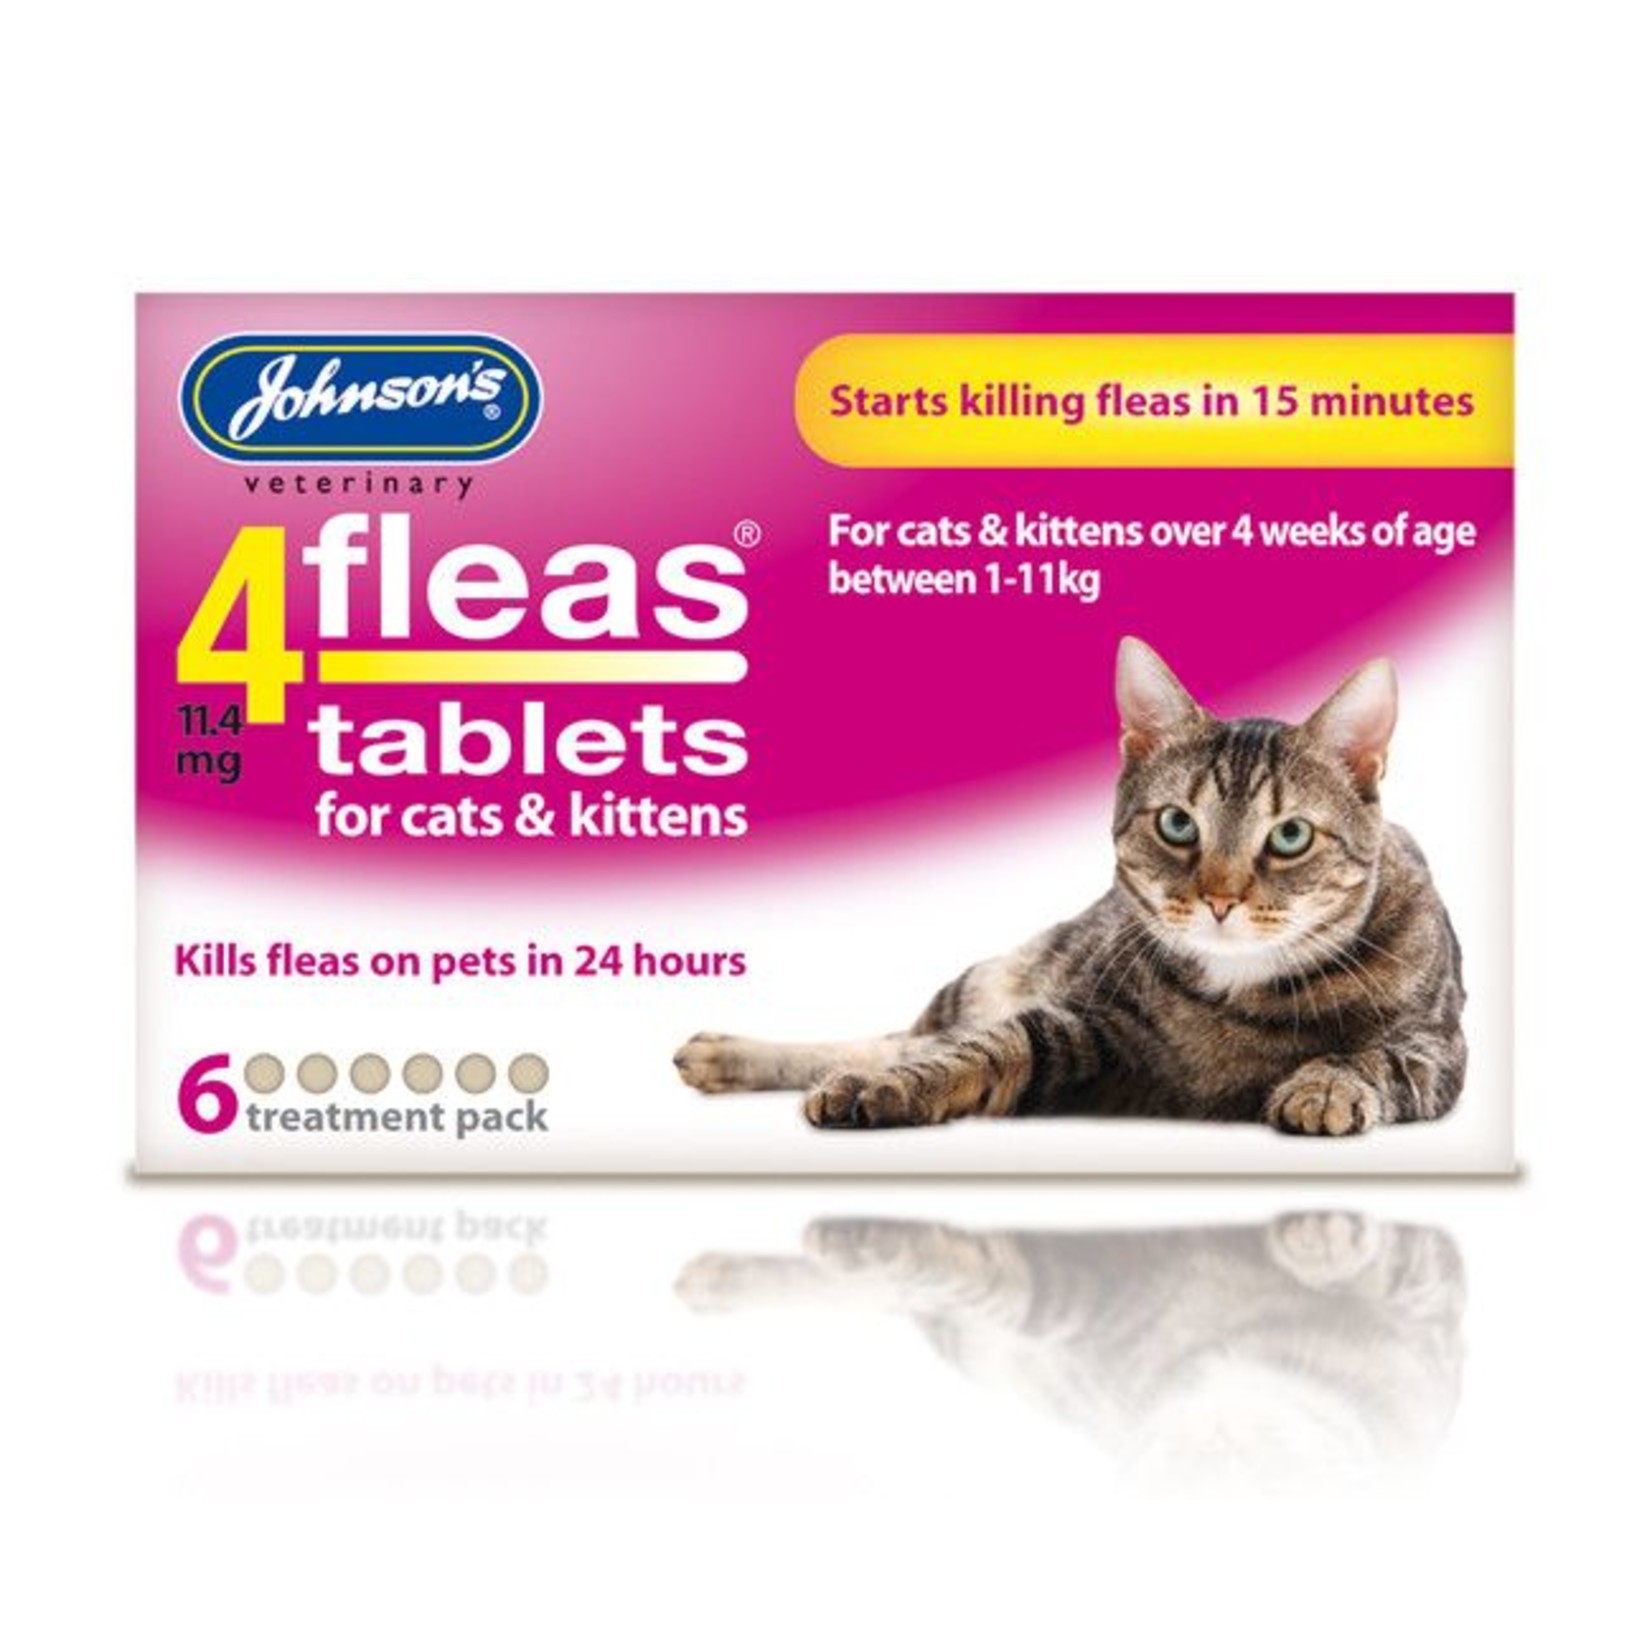 Johnson's Veterinary 4Fleas Tablets for Cats & Kittens, 6 treatment pack